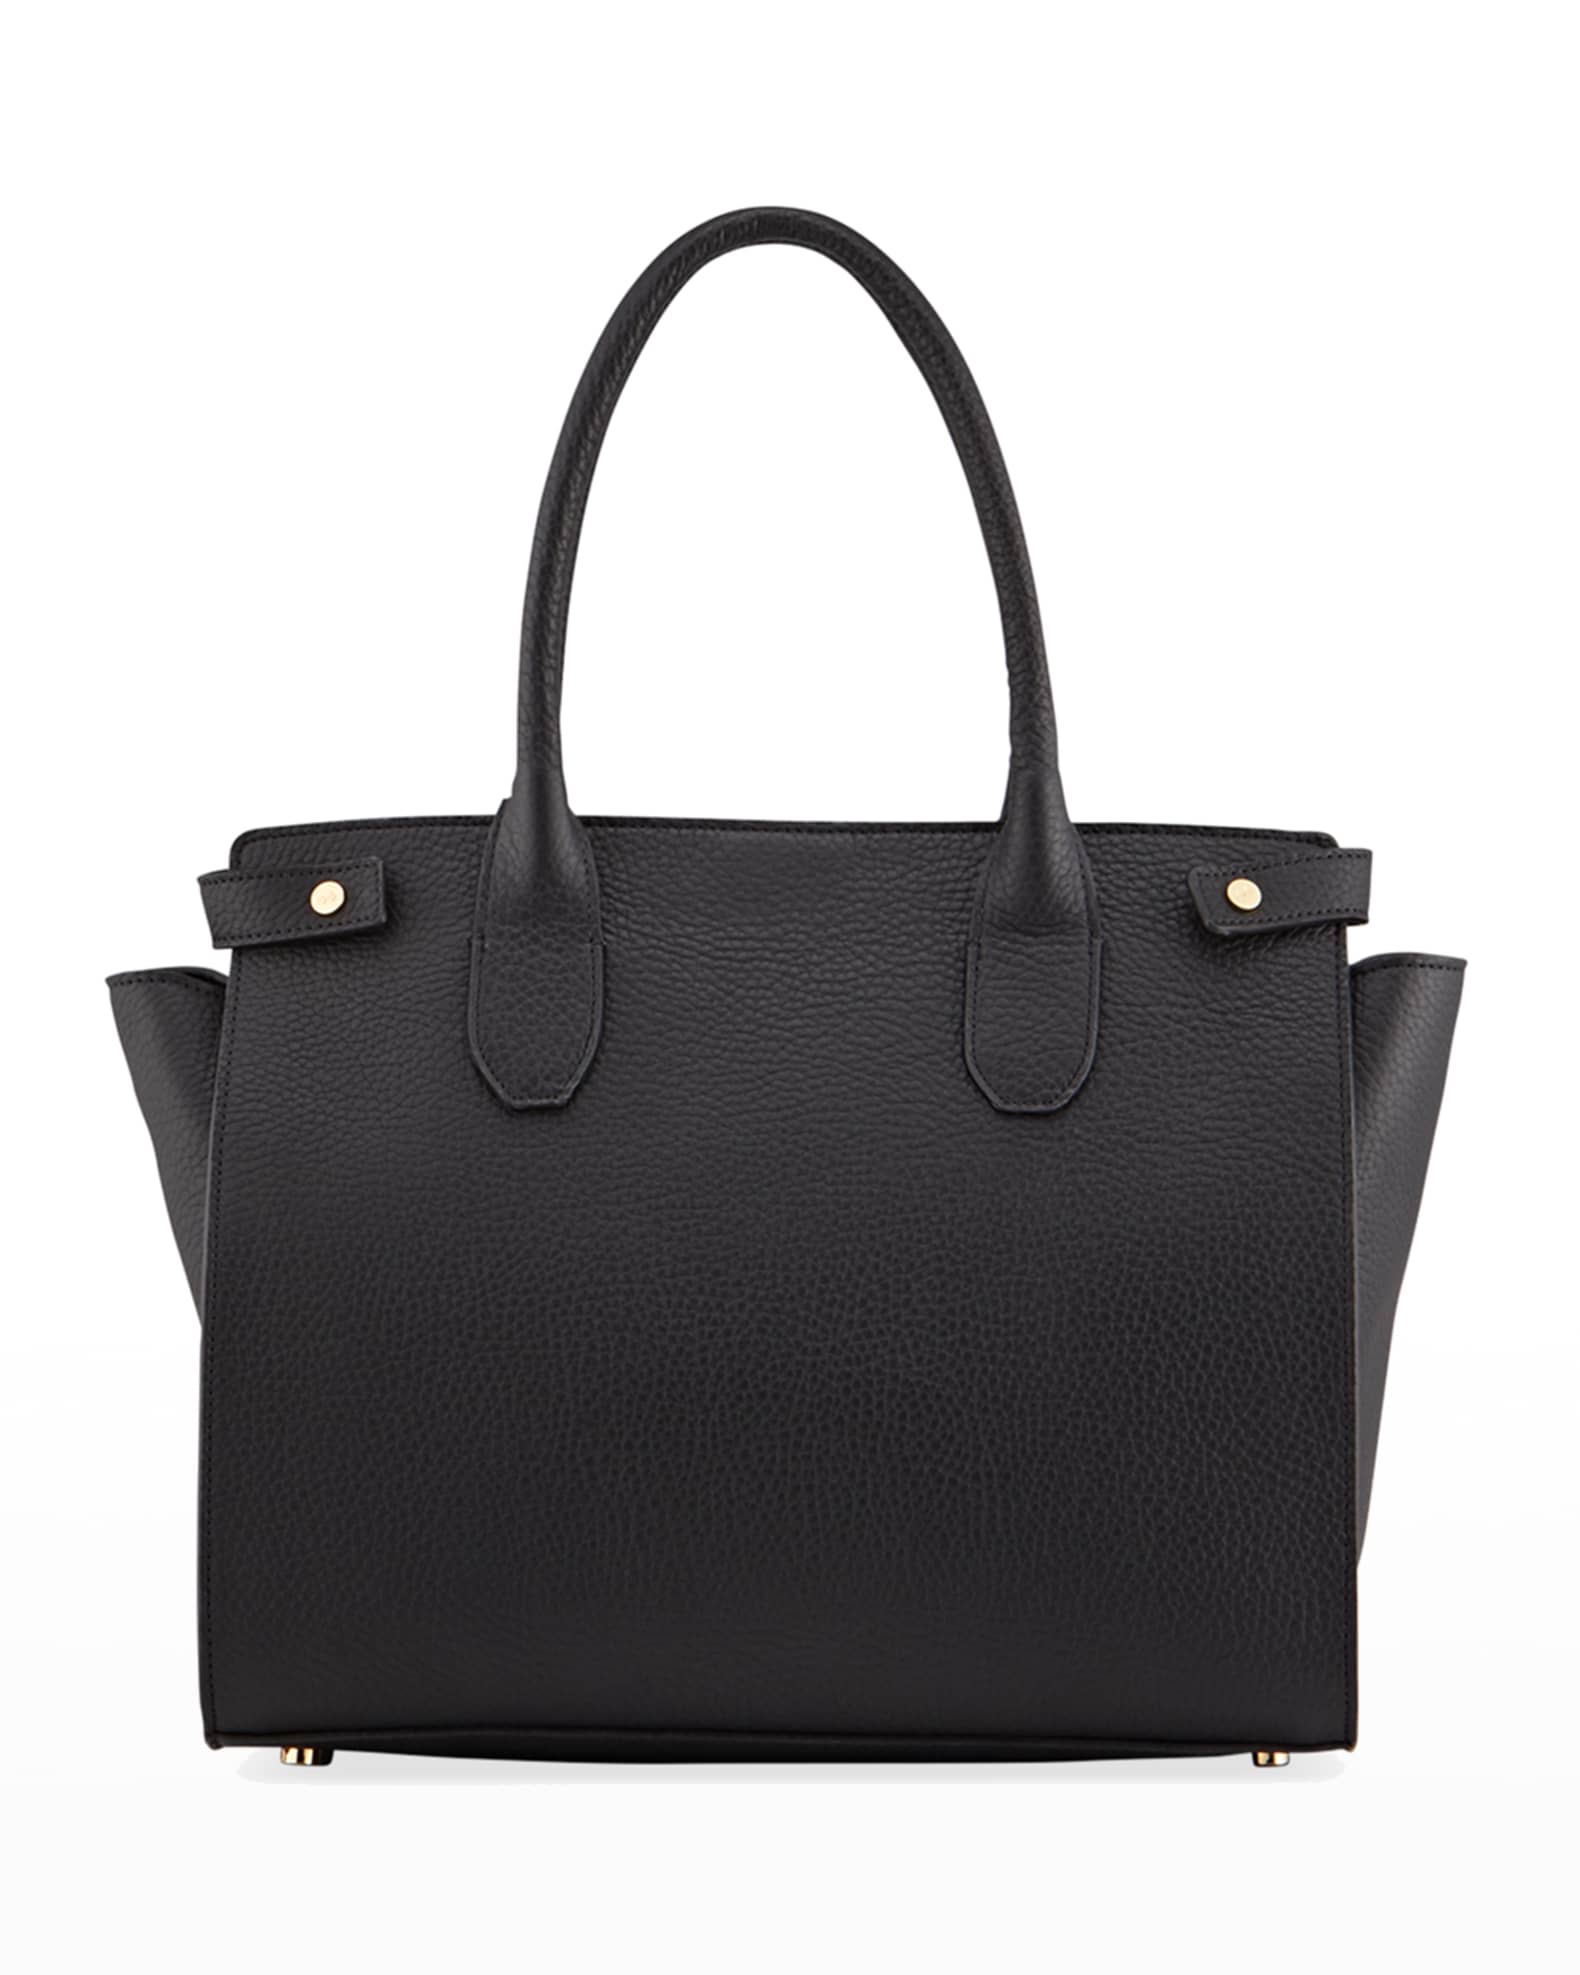 Gigi New York Reese Leather Tote Bag | Neiman Marcus